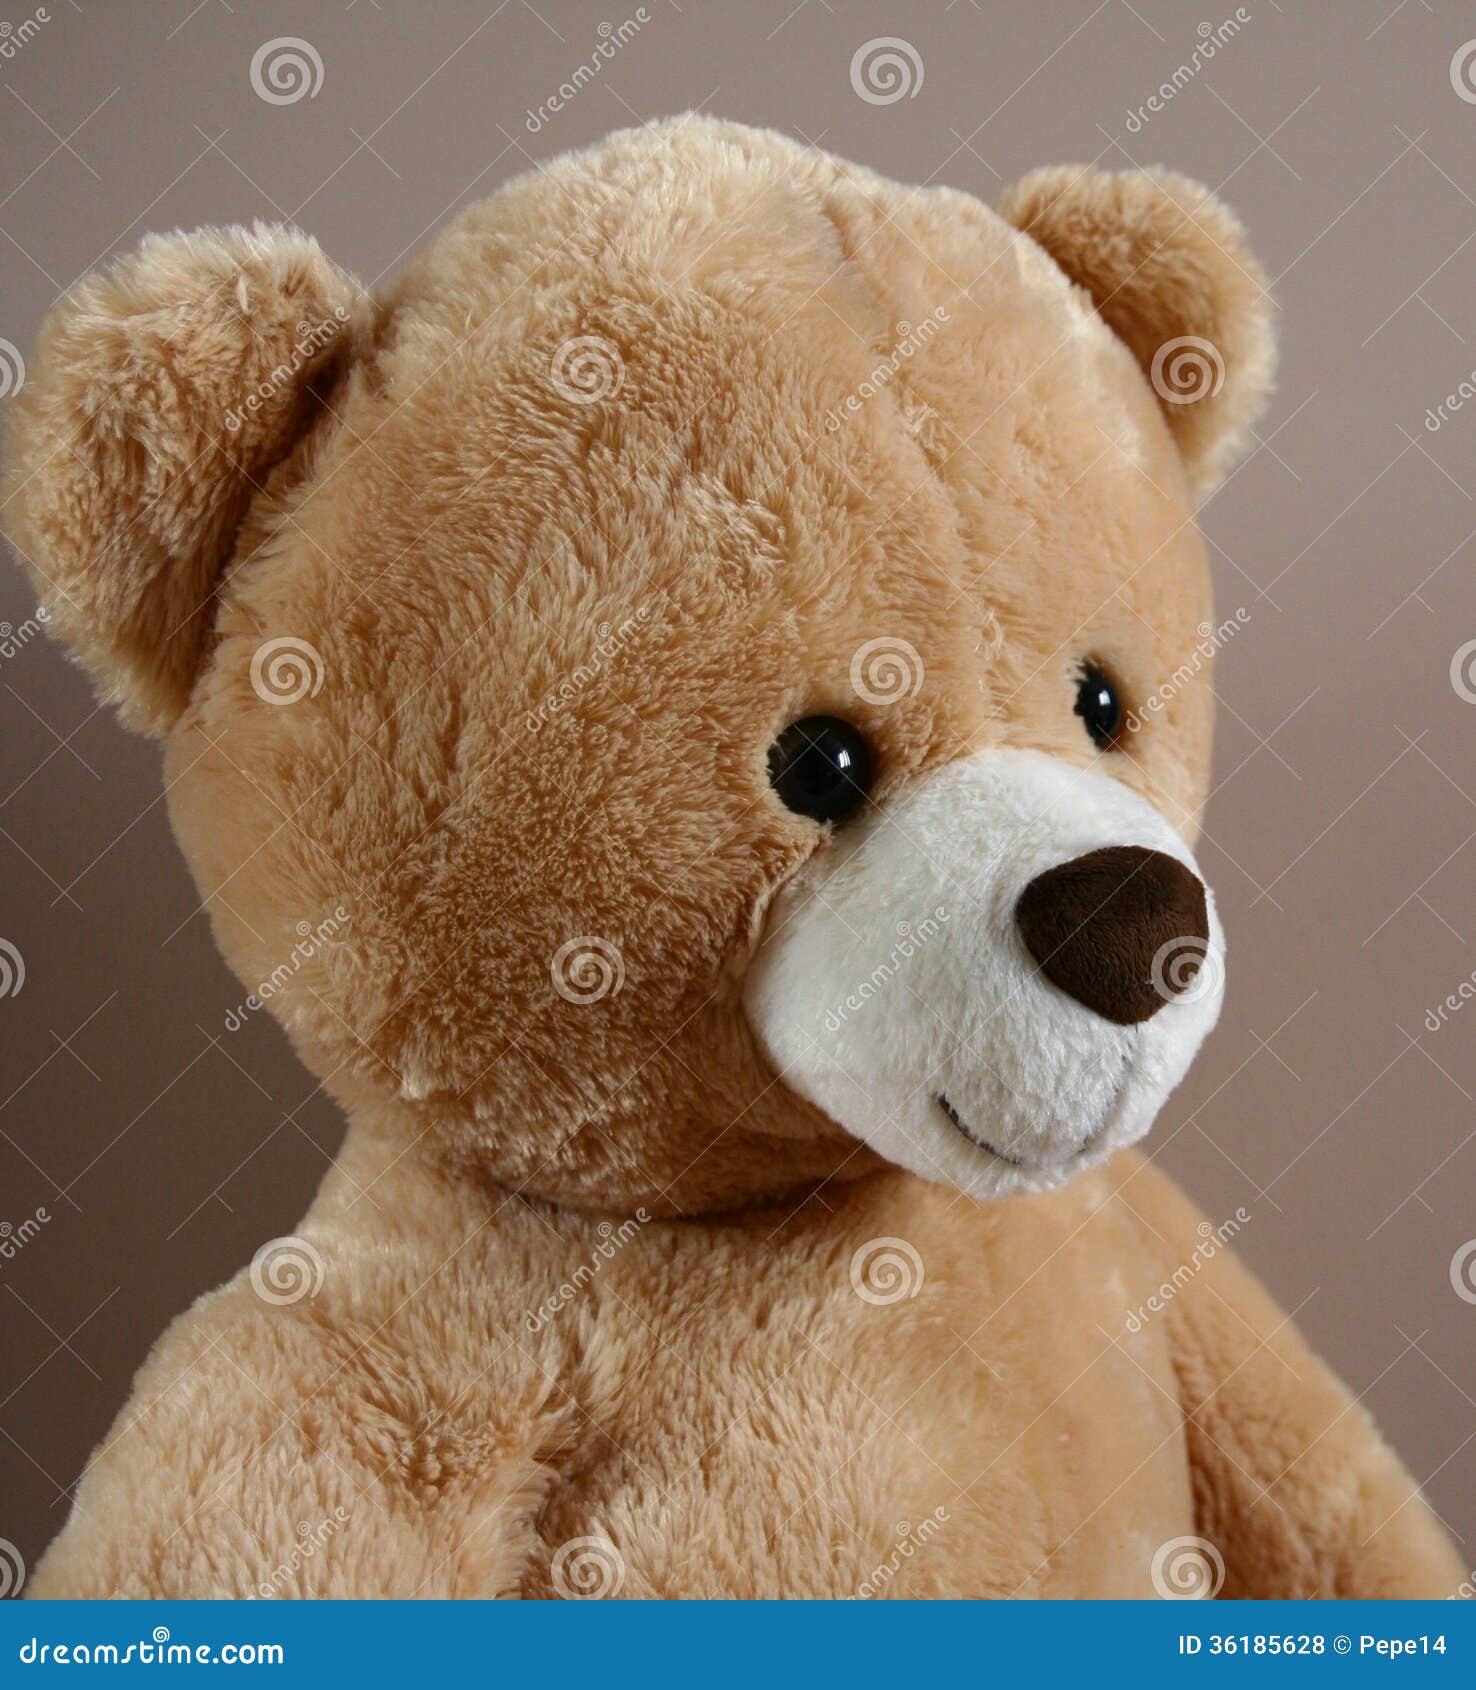 Cuddling Teddy Bears - Unique, high-quality Poster - Photowall